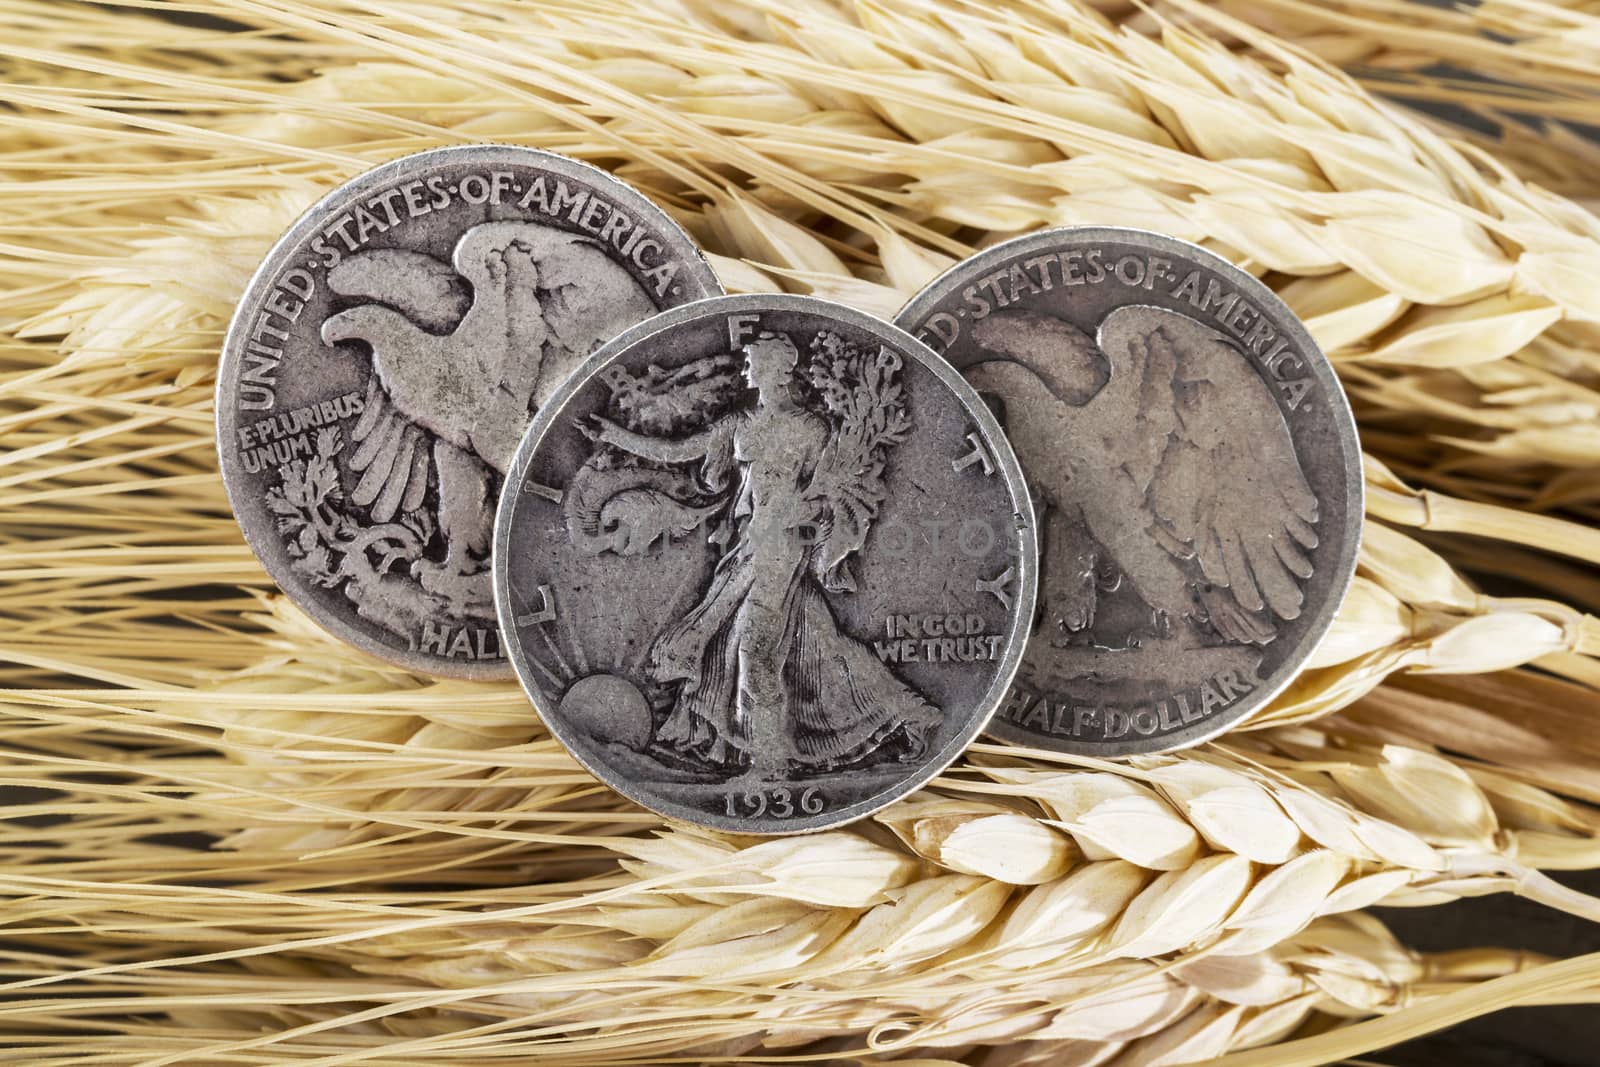 United States Silver half dollars on wheat stalk background 